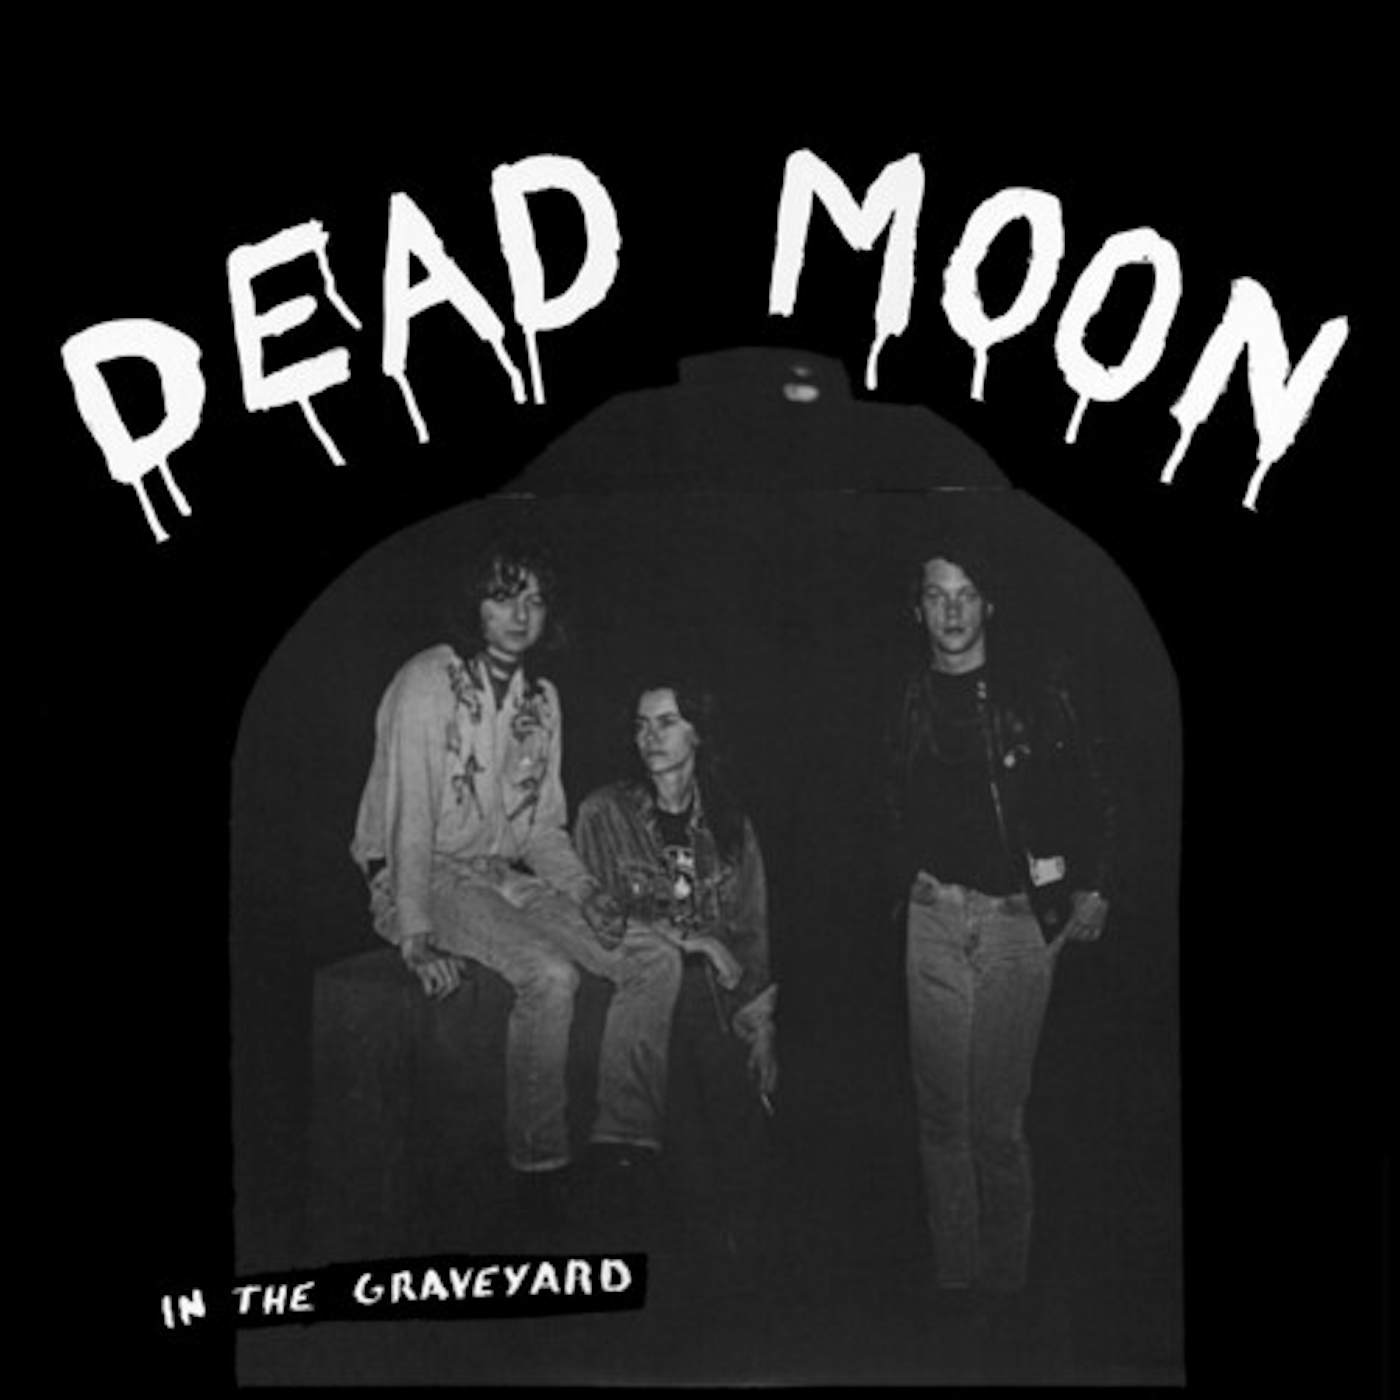 Dead Moon In the Graveyard Vinyl Record